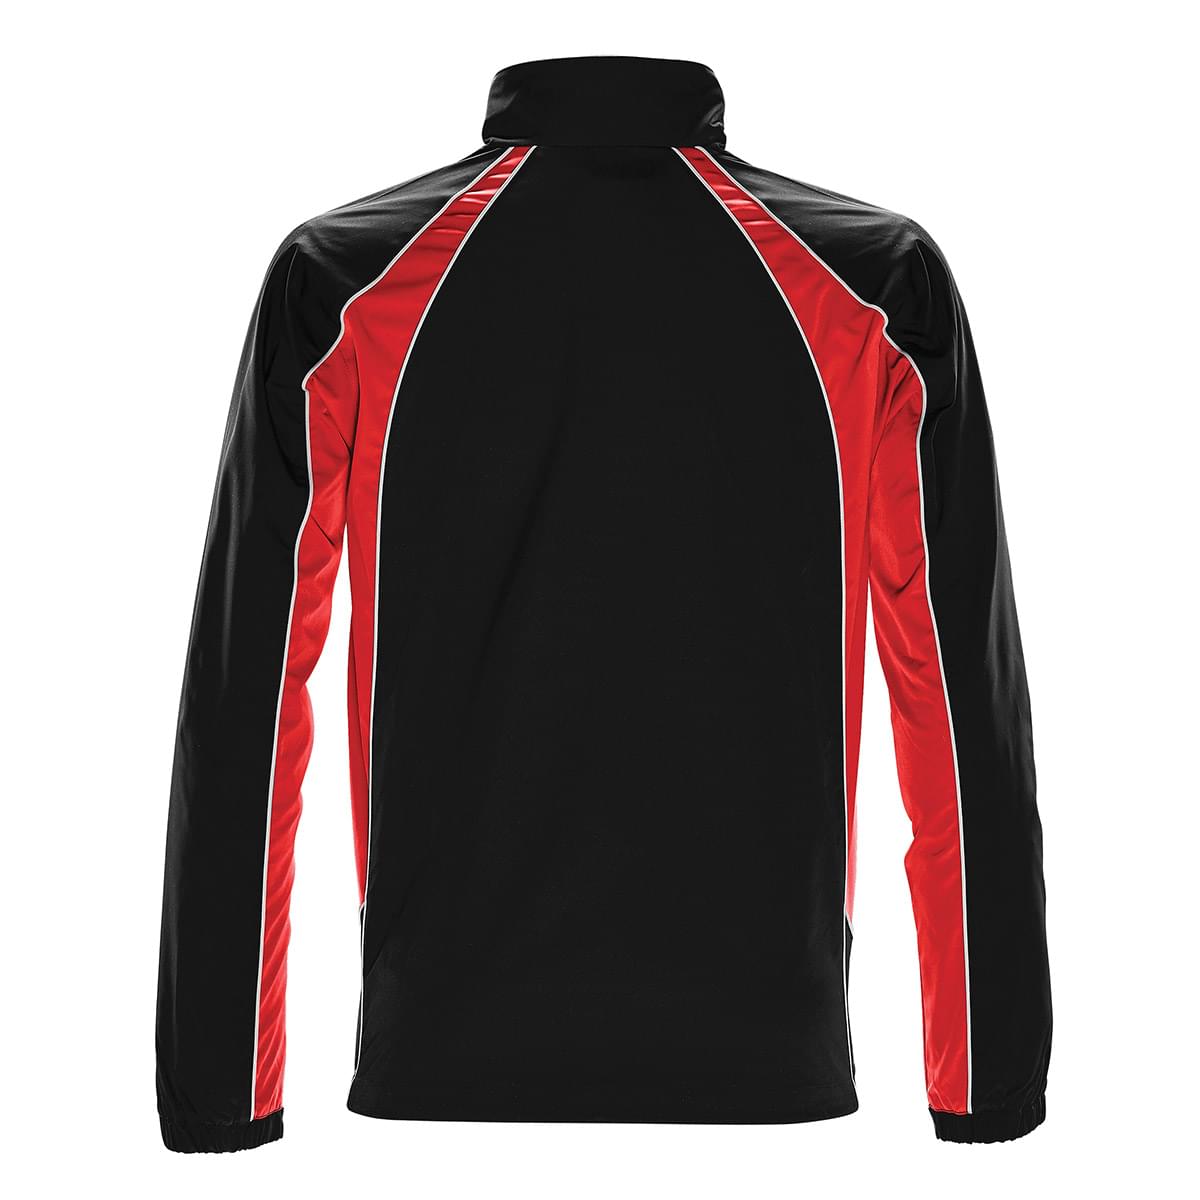 Men's Track Jacket Sports Jacket Casual Jacket Mesh Lining Size L - XXL